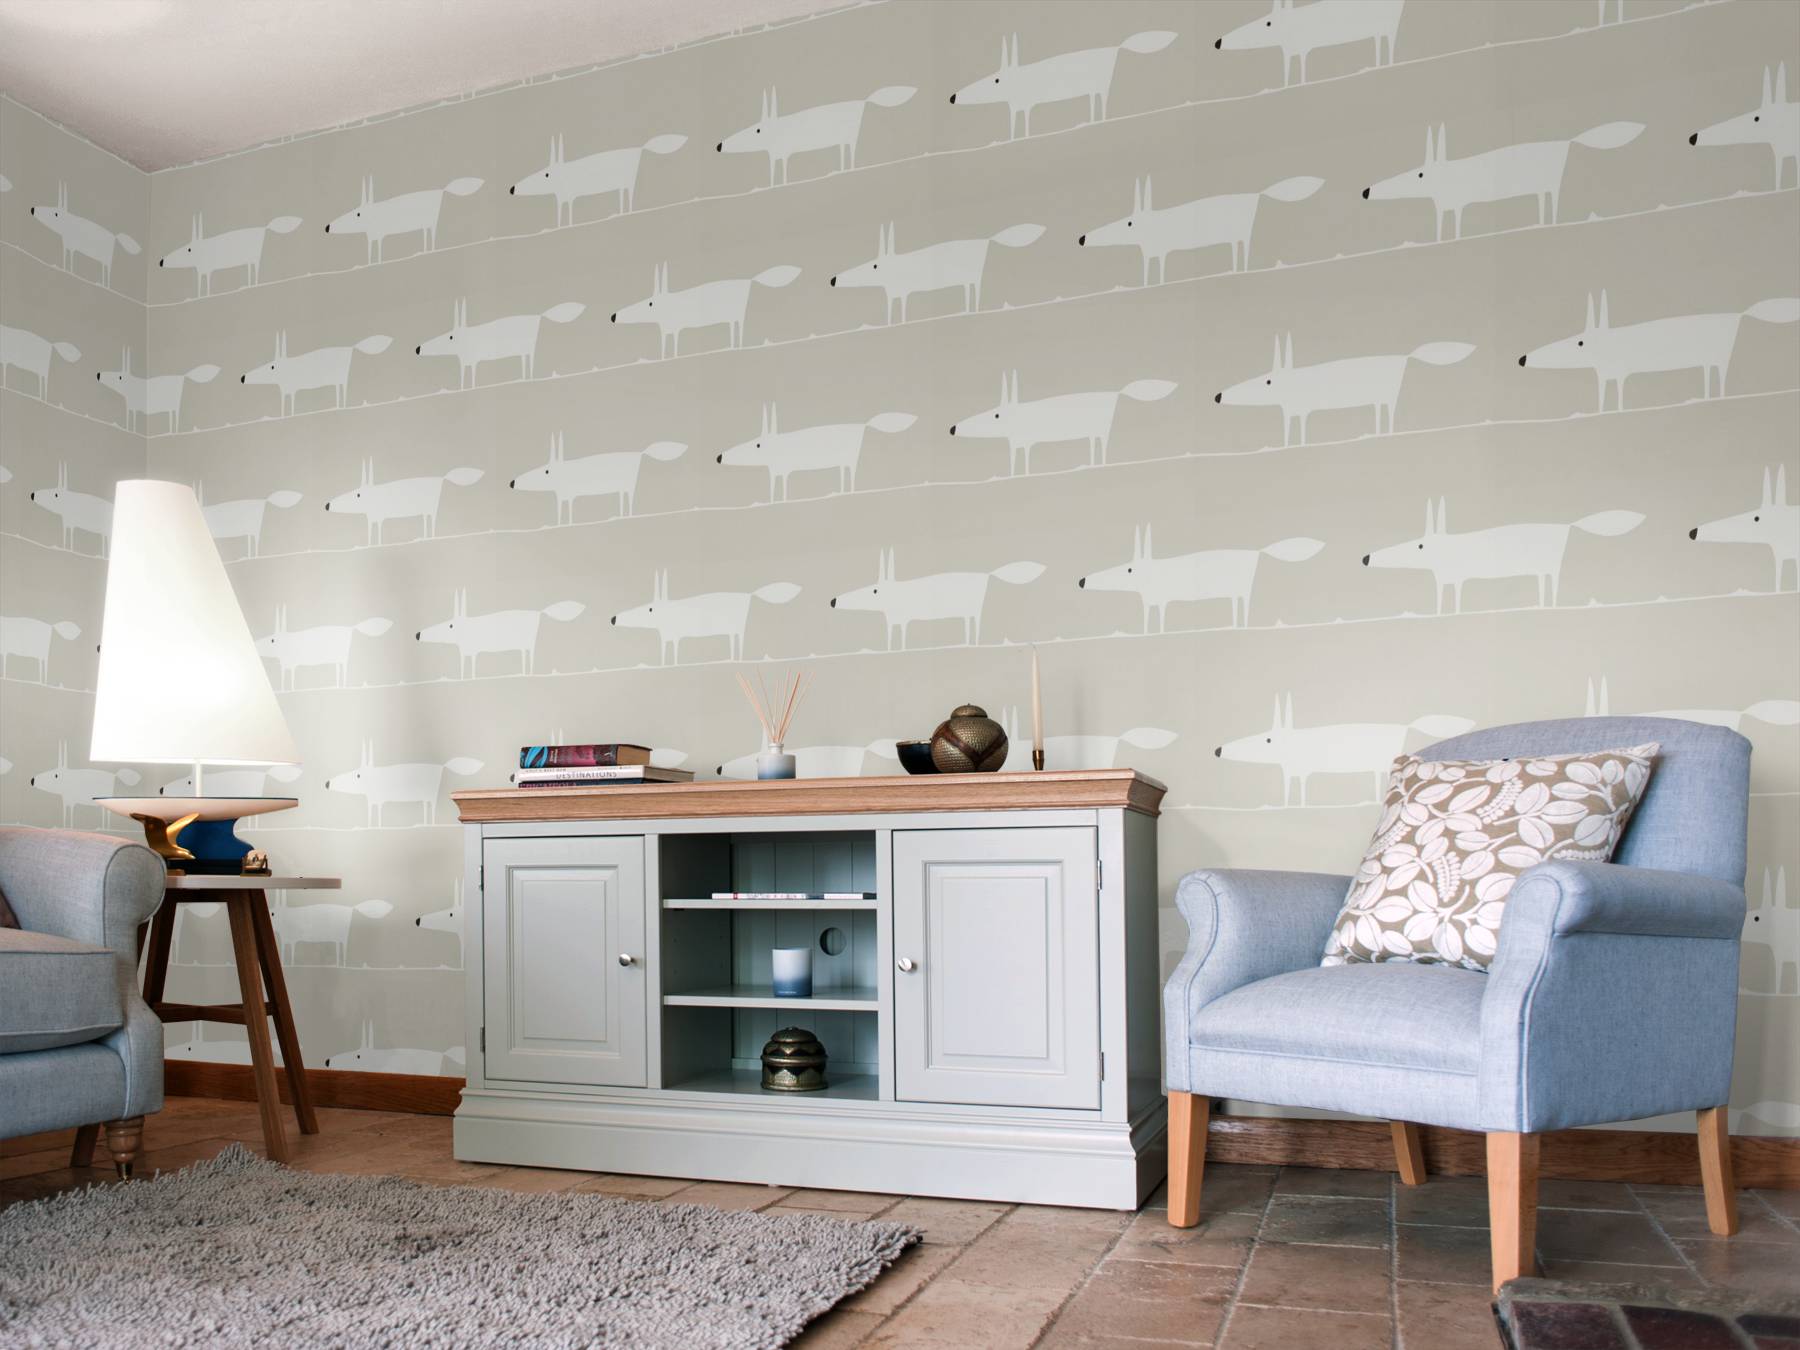 scion fox wallpaper,room,furniture,wall,property,interior design